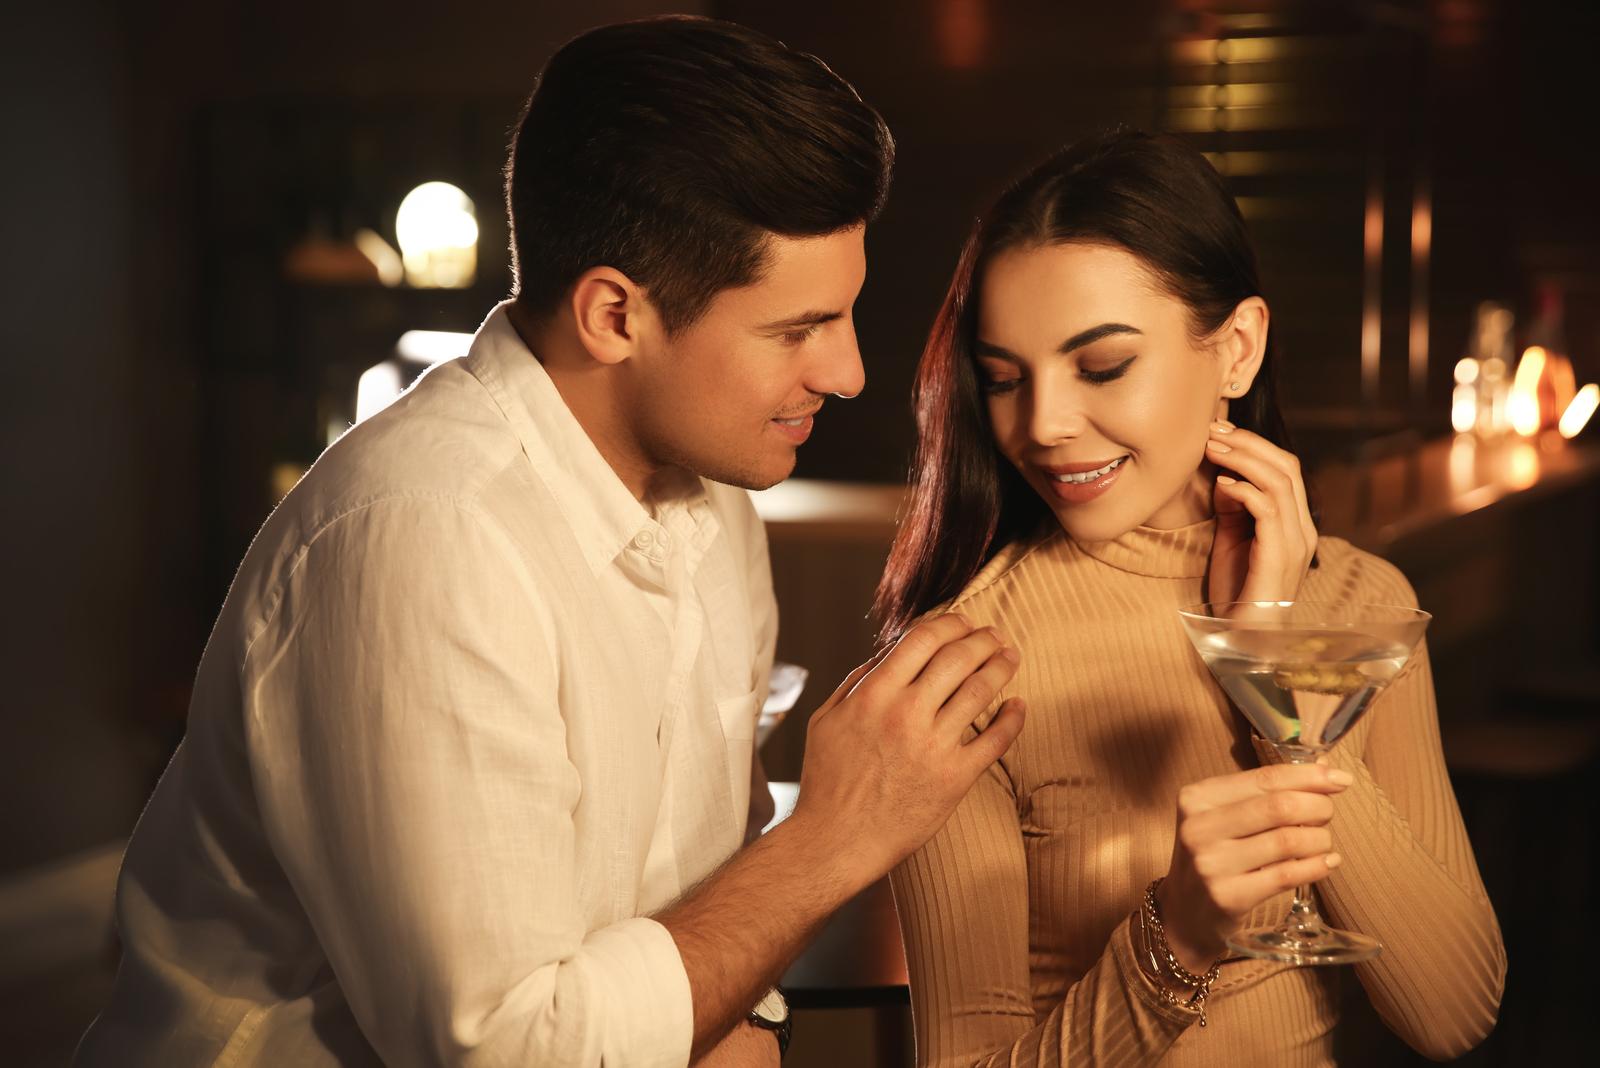 man flirting with woman in bar